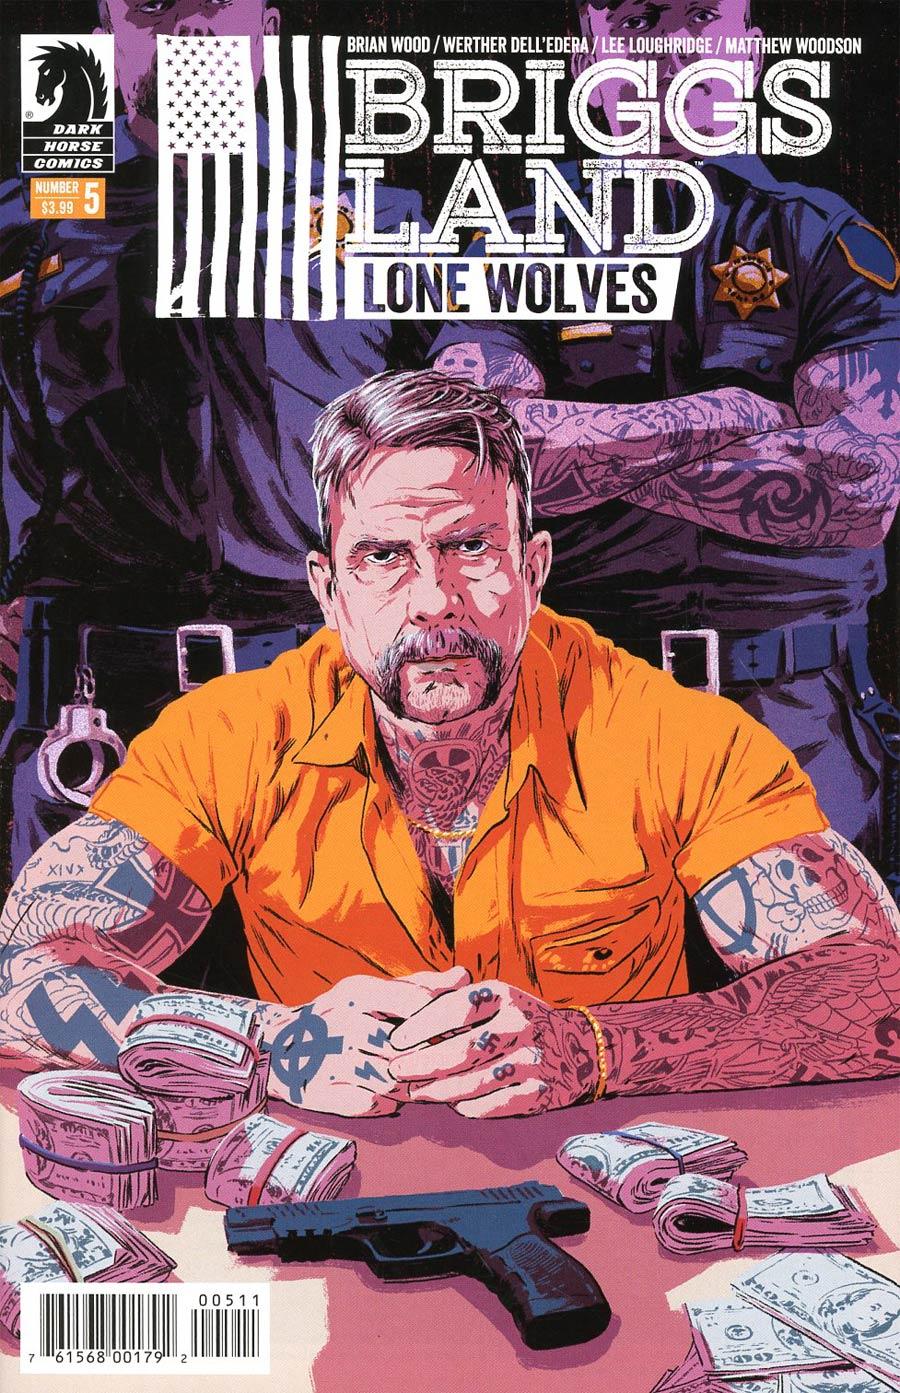 Briggs Land Lone Wolves Vol. 1 #5